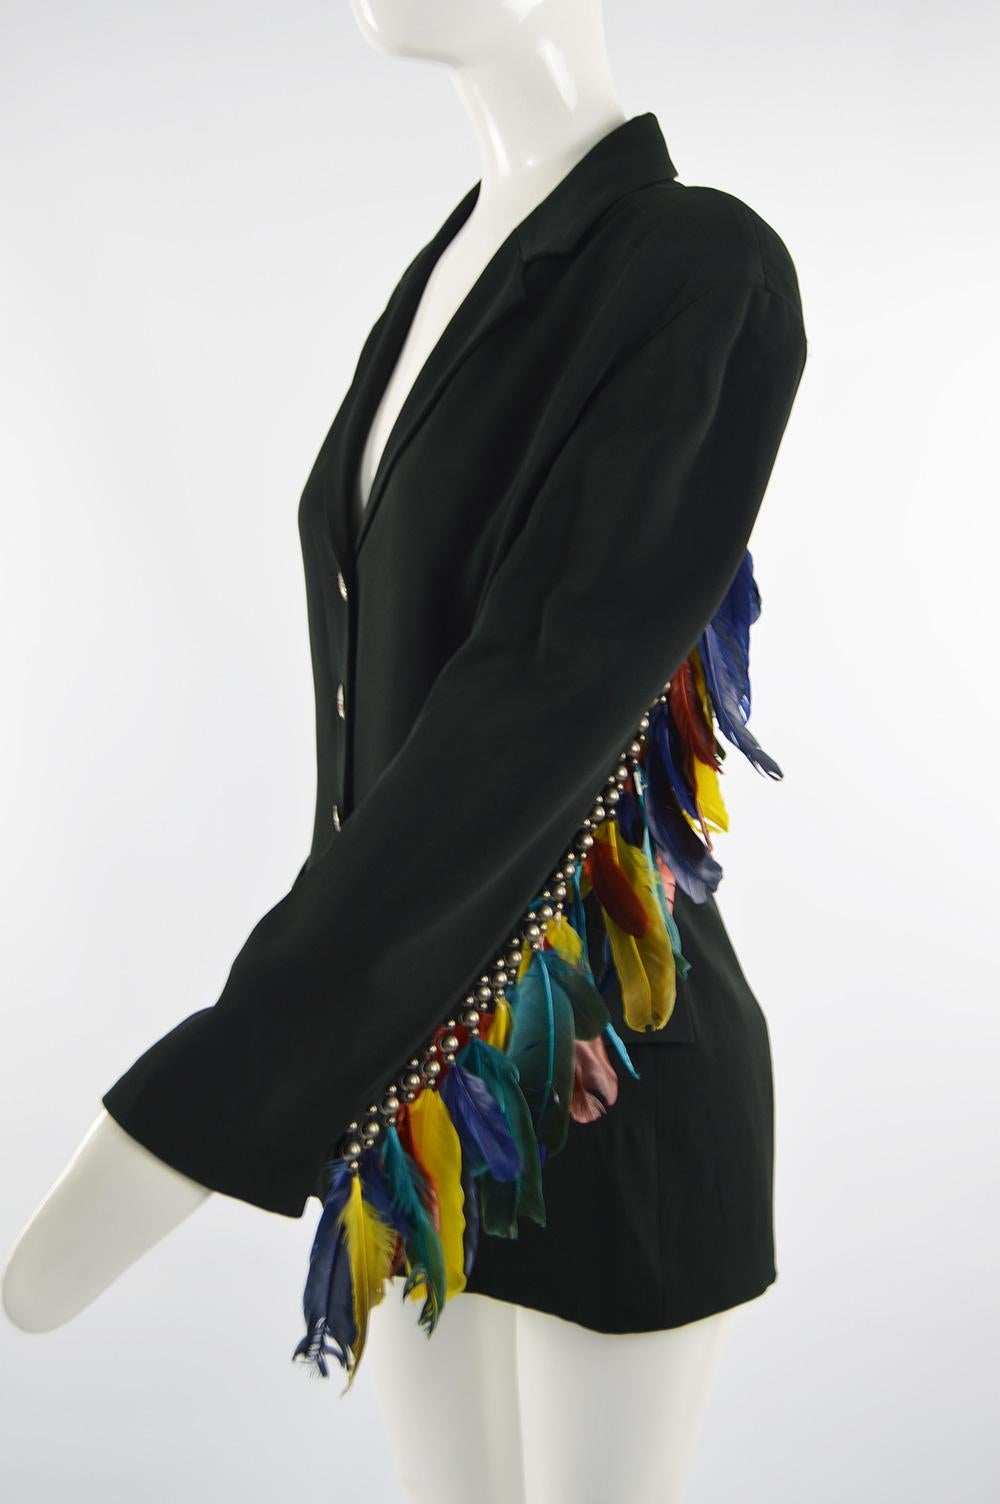 Black Rifat Ozbek Vintage Women's Feather Adorned Party Blazer Jacket, 1980s